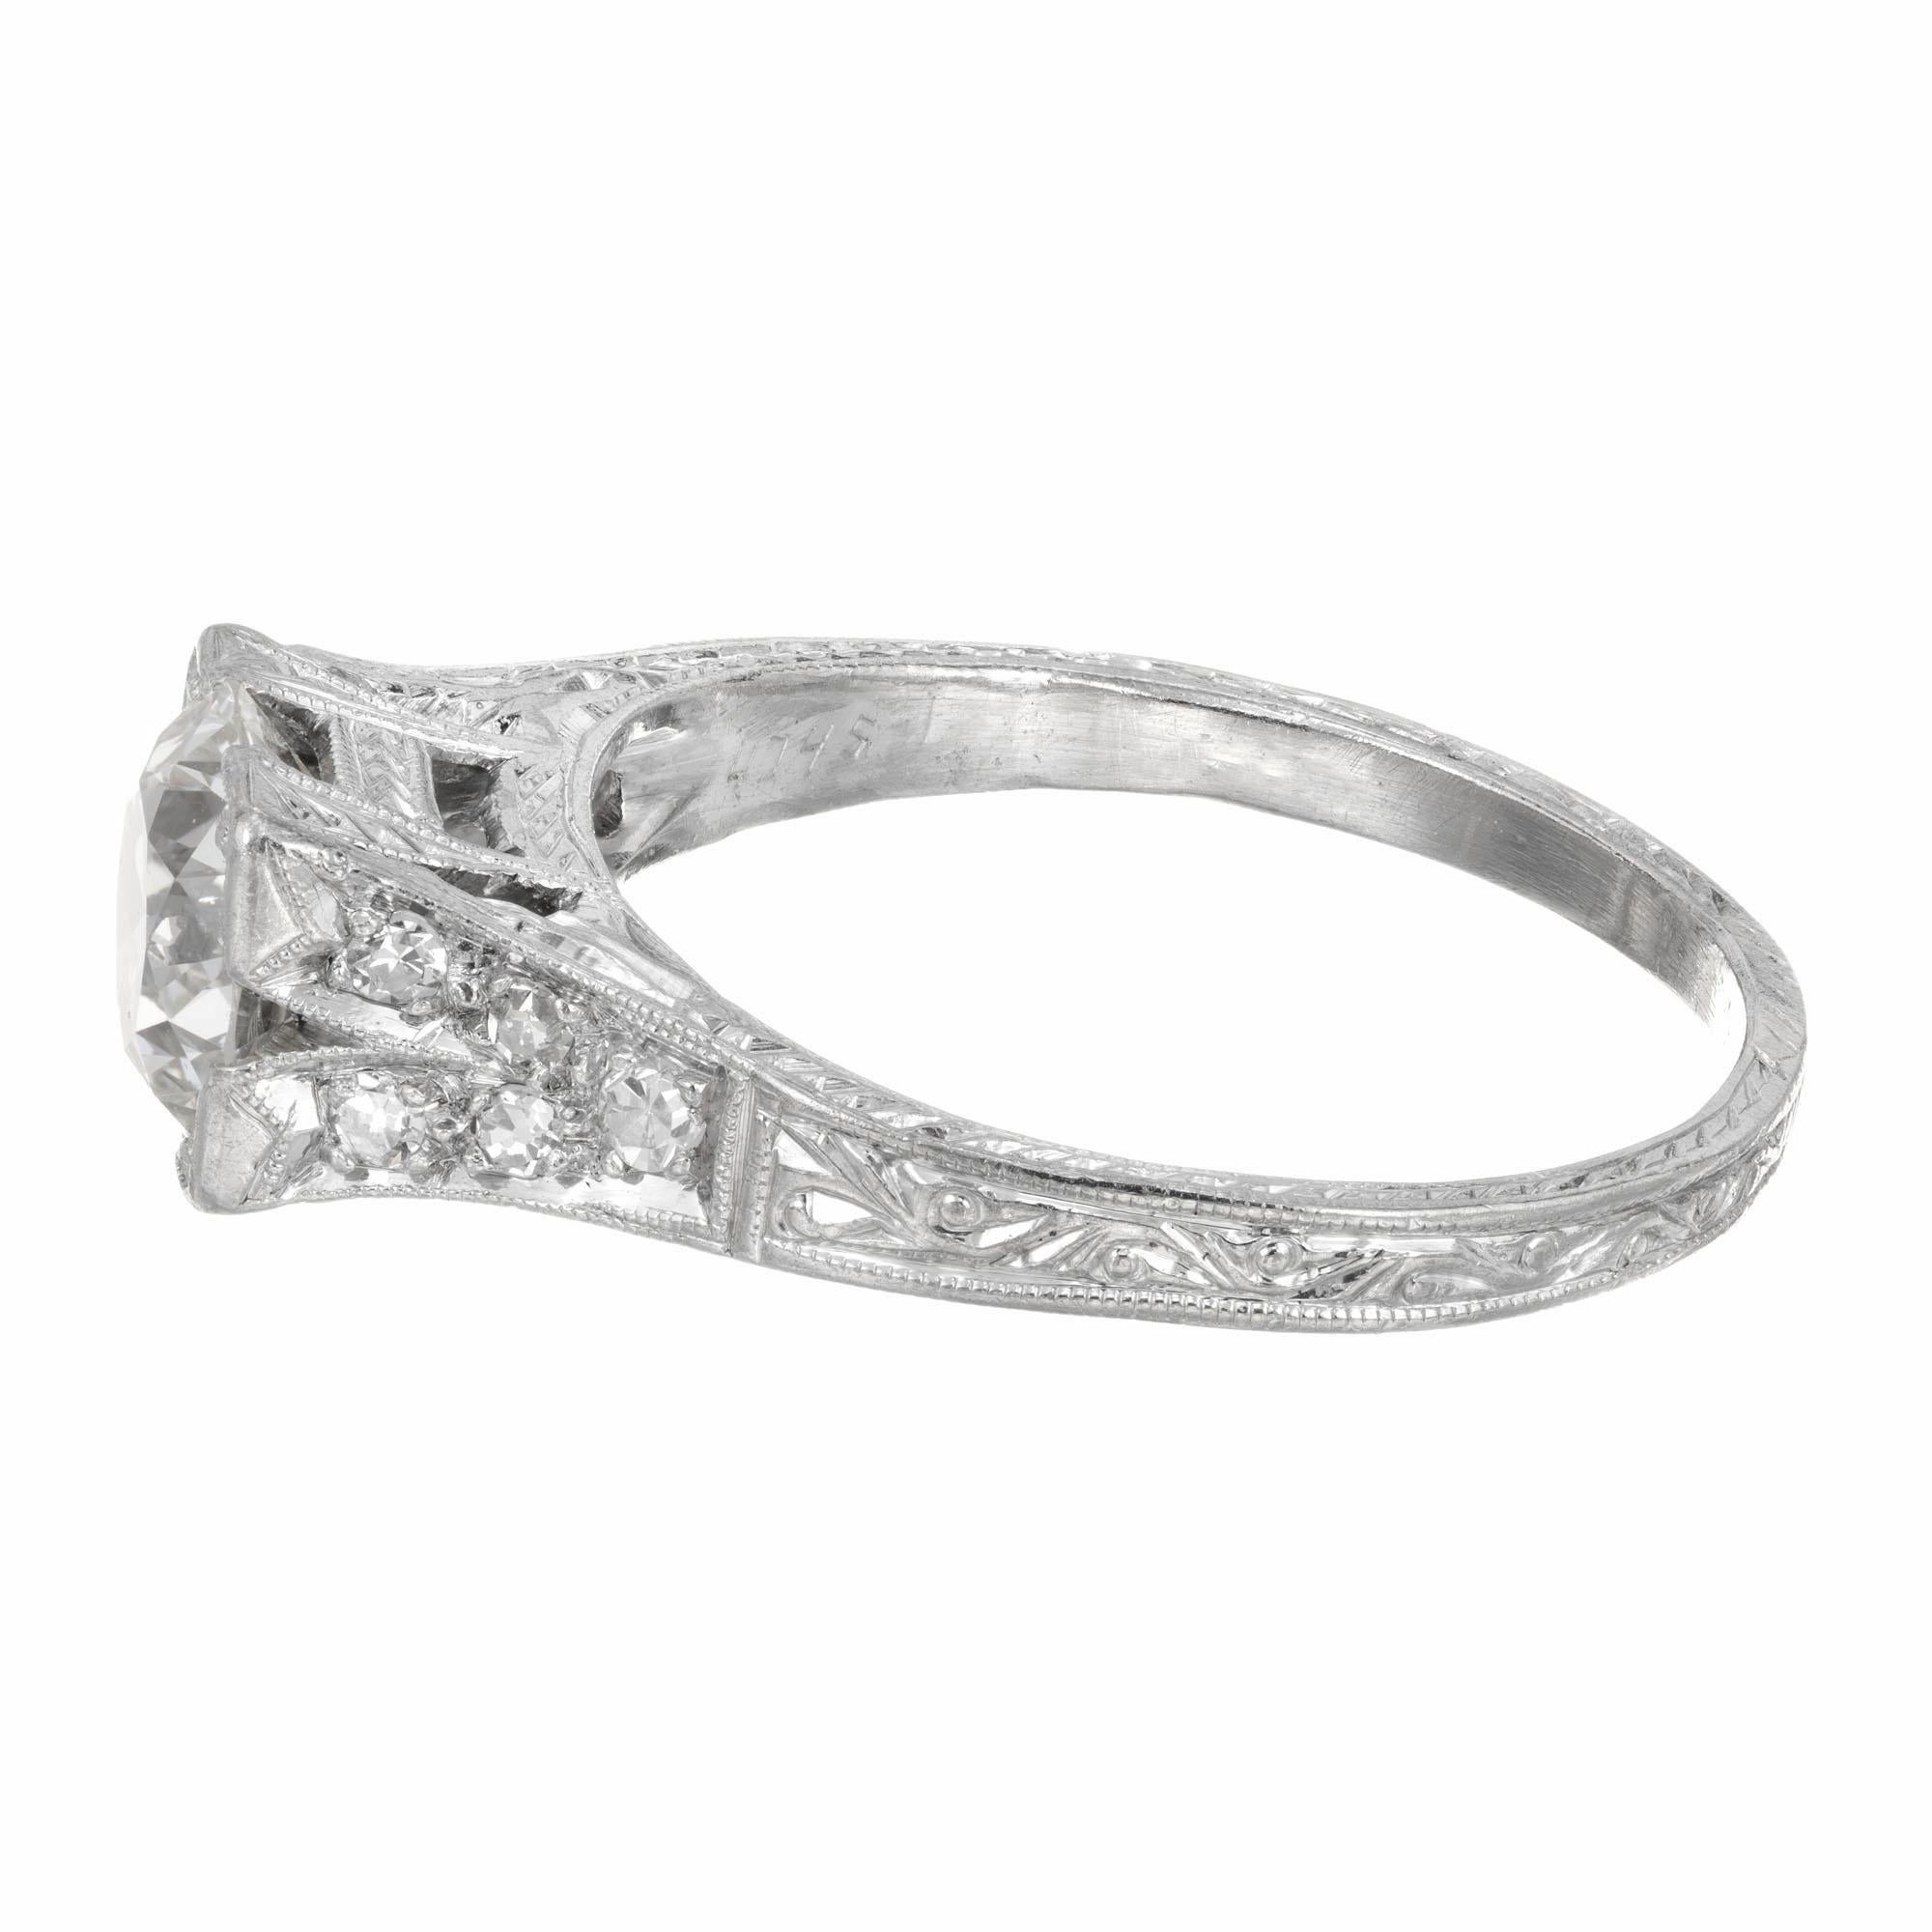 1930s diamond engagement ring